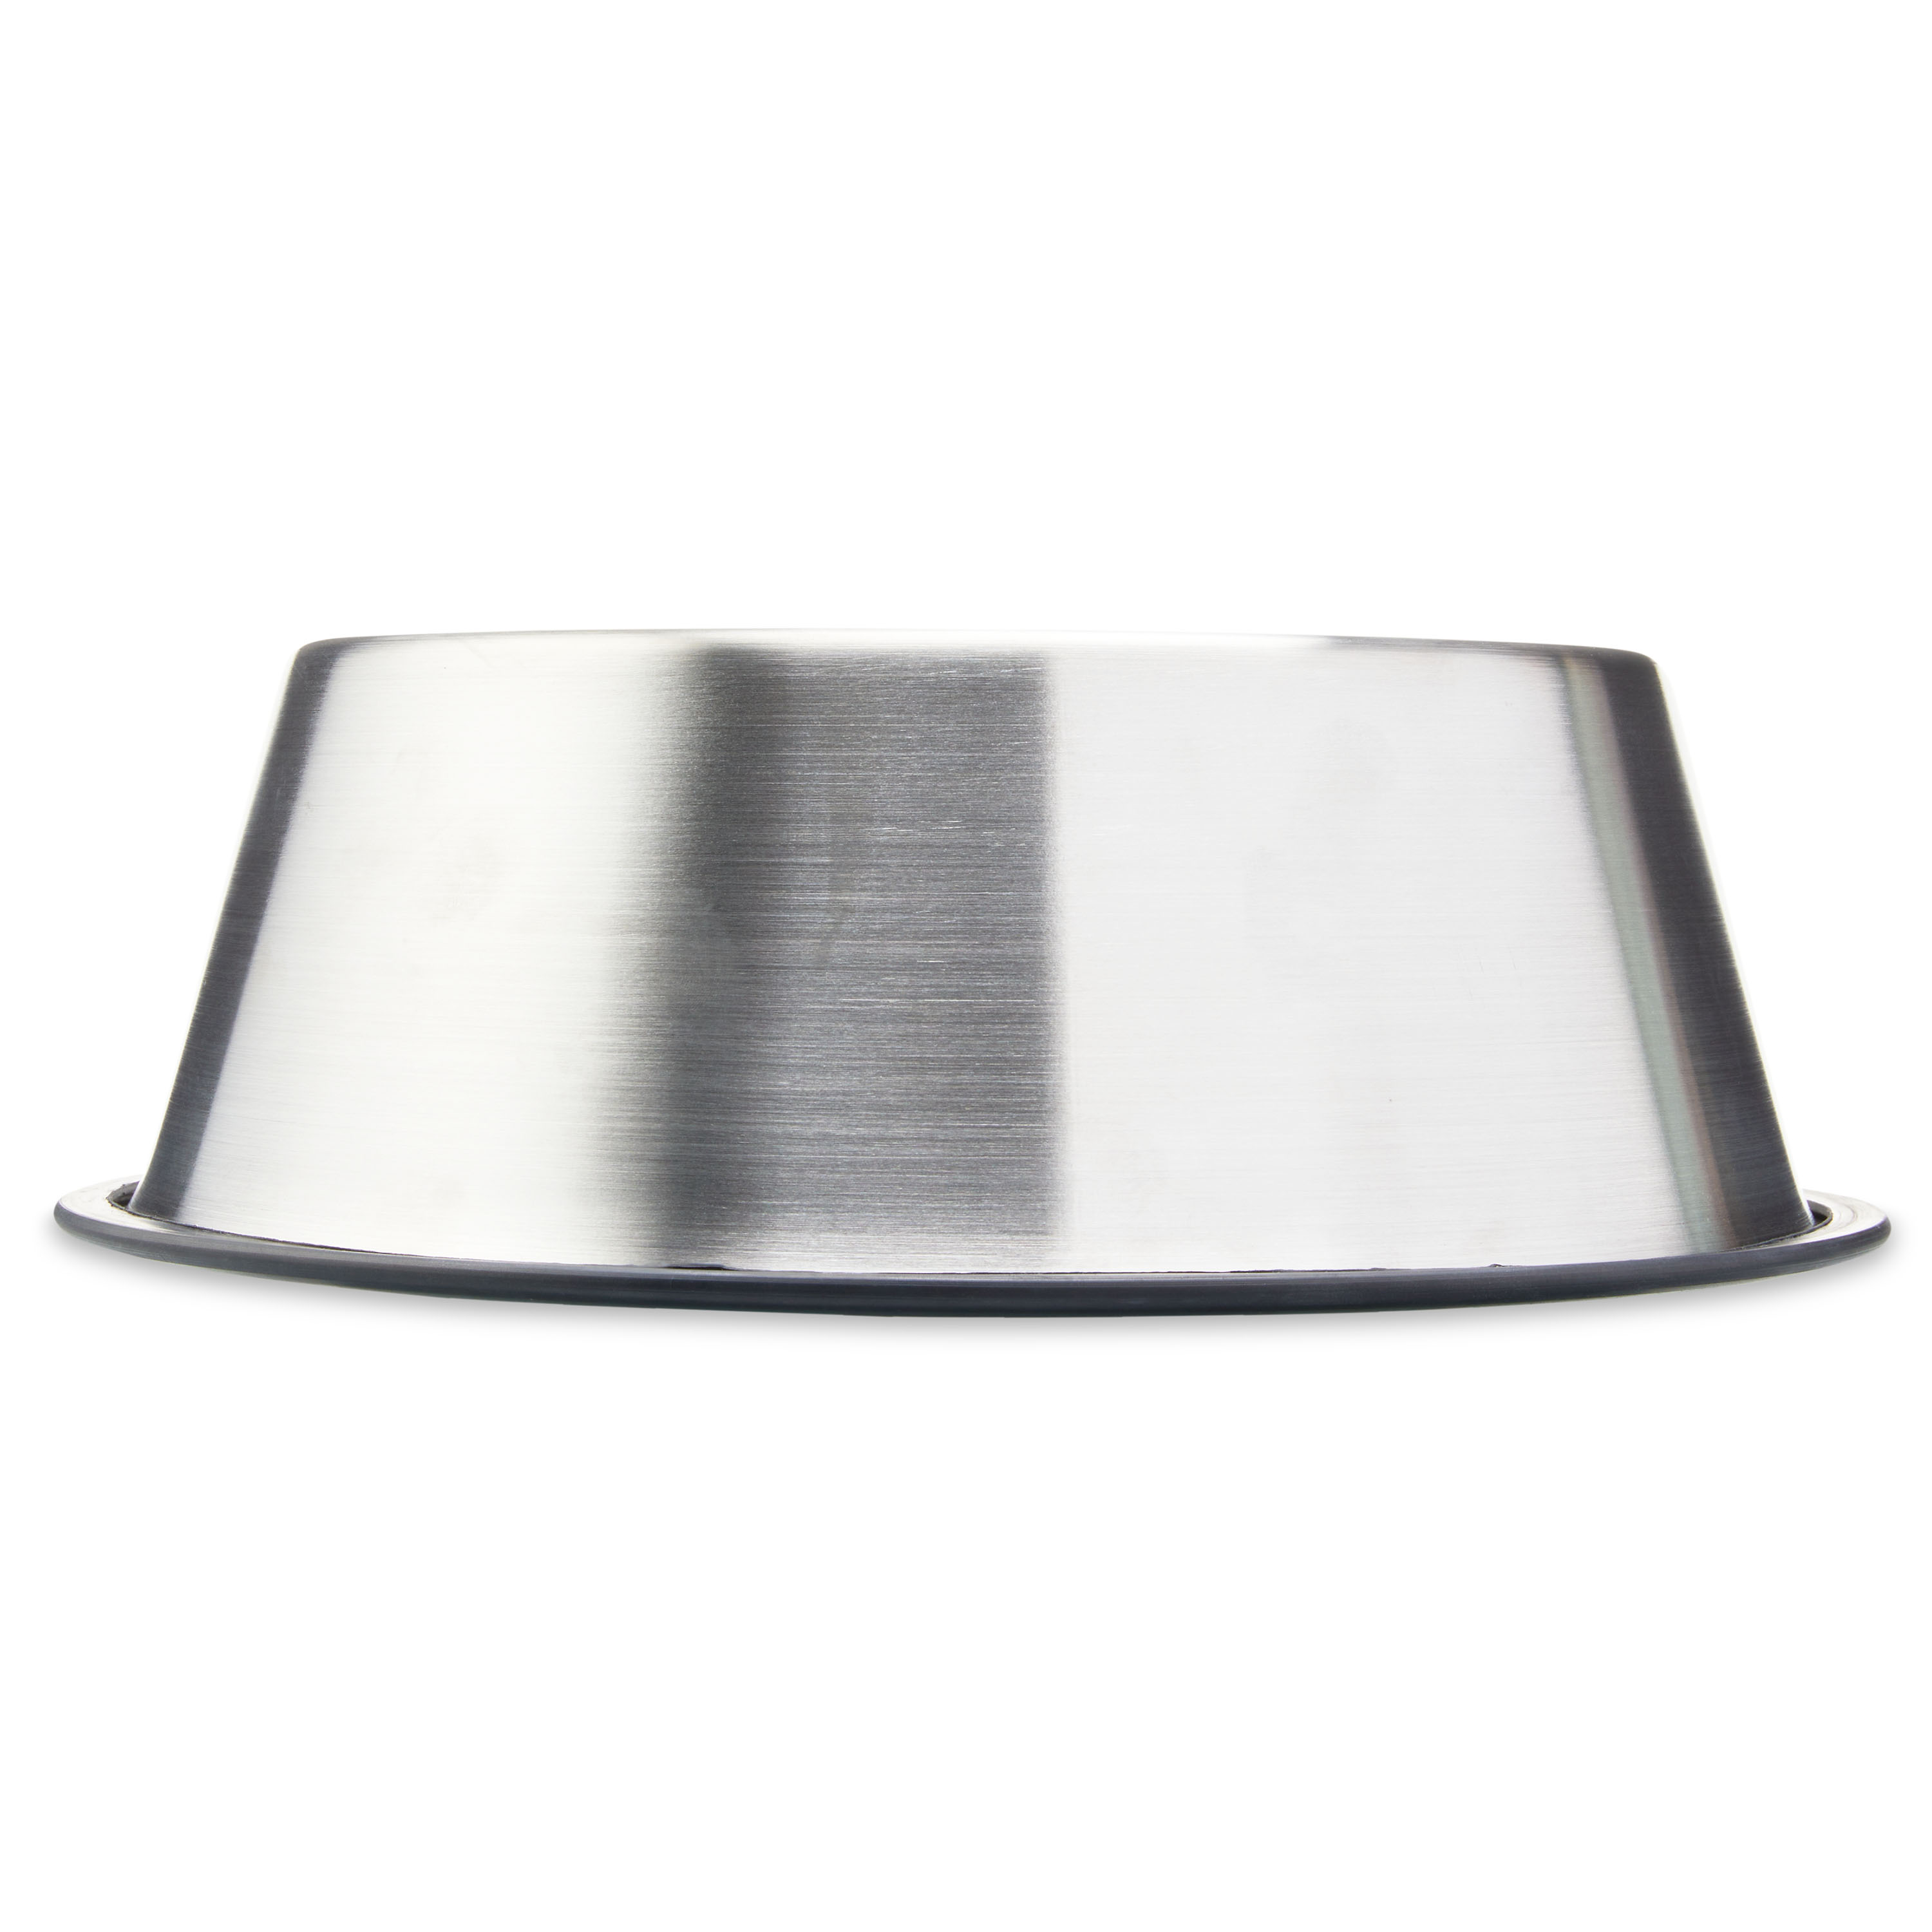 Vibrant Life Stainless Steel Jumbo Dog Bowl, Medium - image 3 of 4